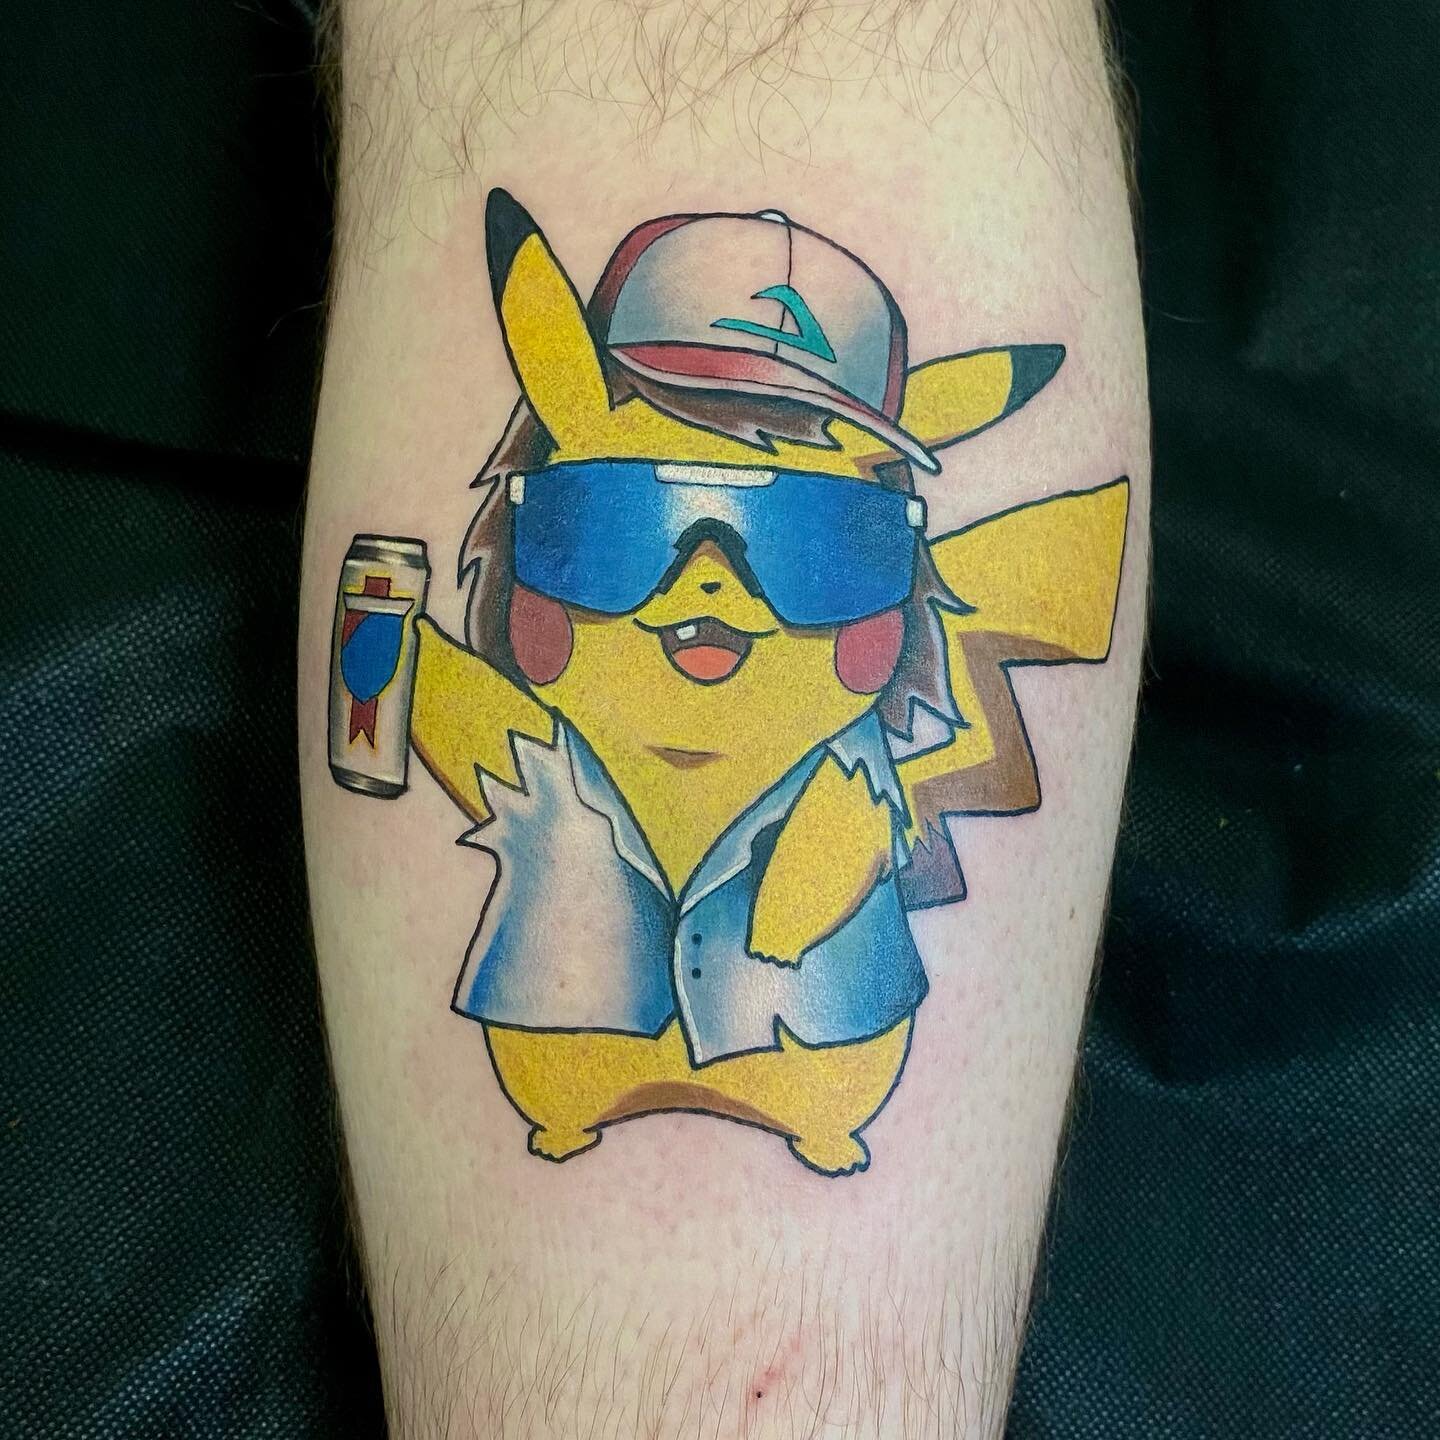 30+ Best Pikachu Tattoo Design Ideas (And What They Mean) | Pikachu tattoo, Pikachu  tattoo design, Pokemon tattoo